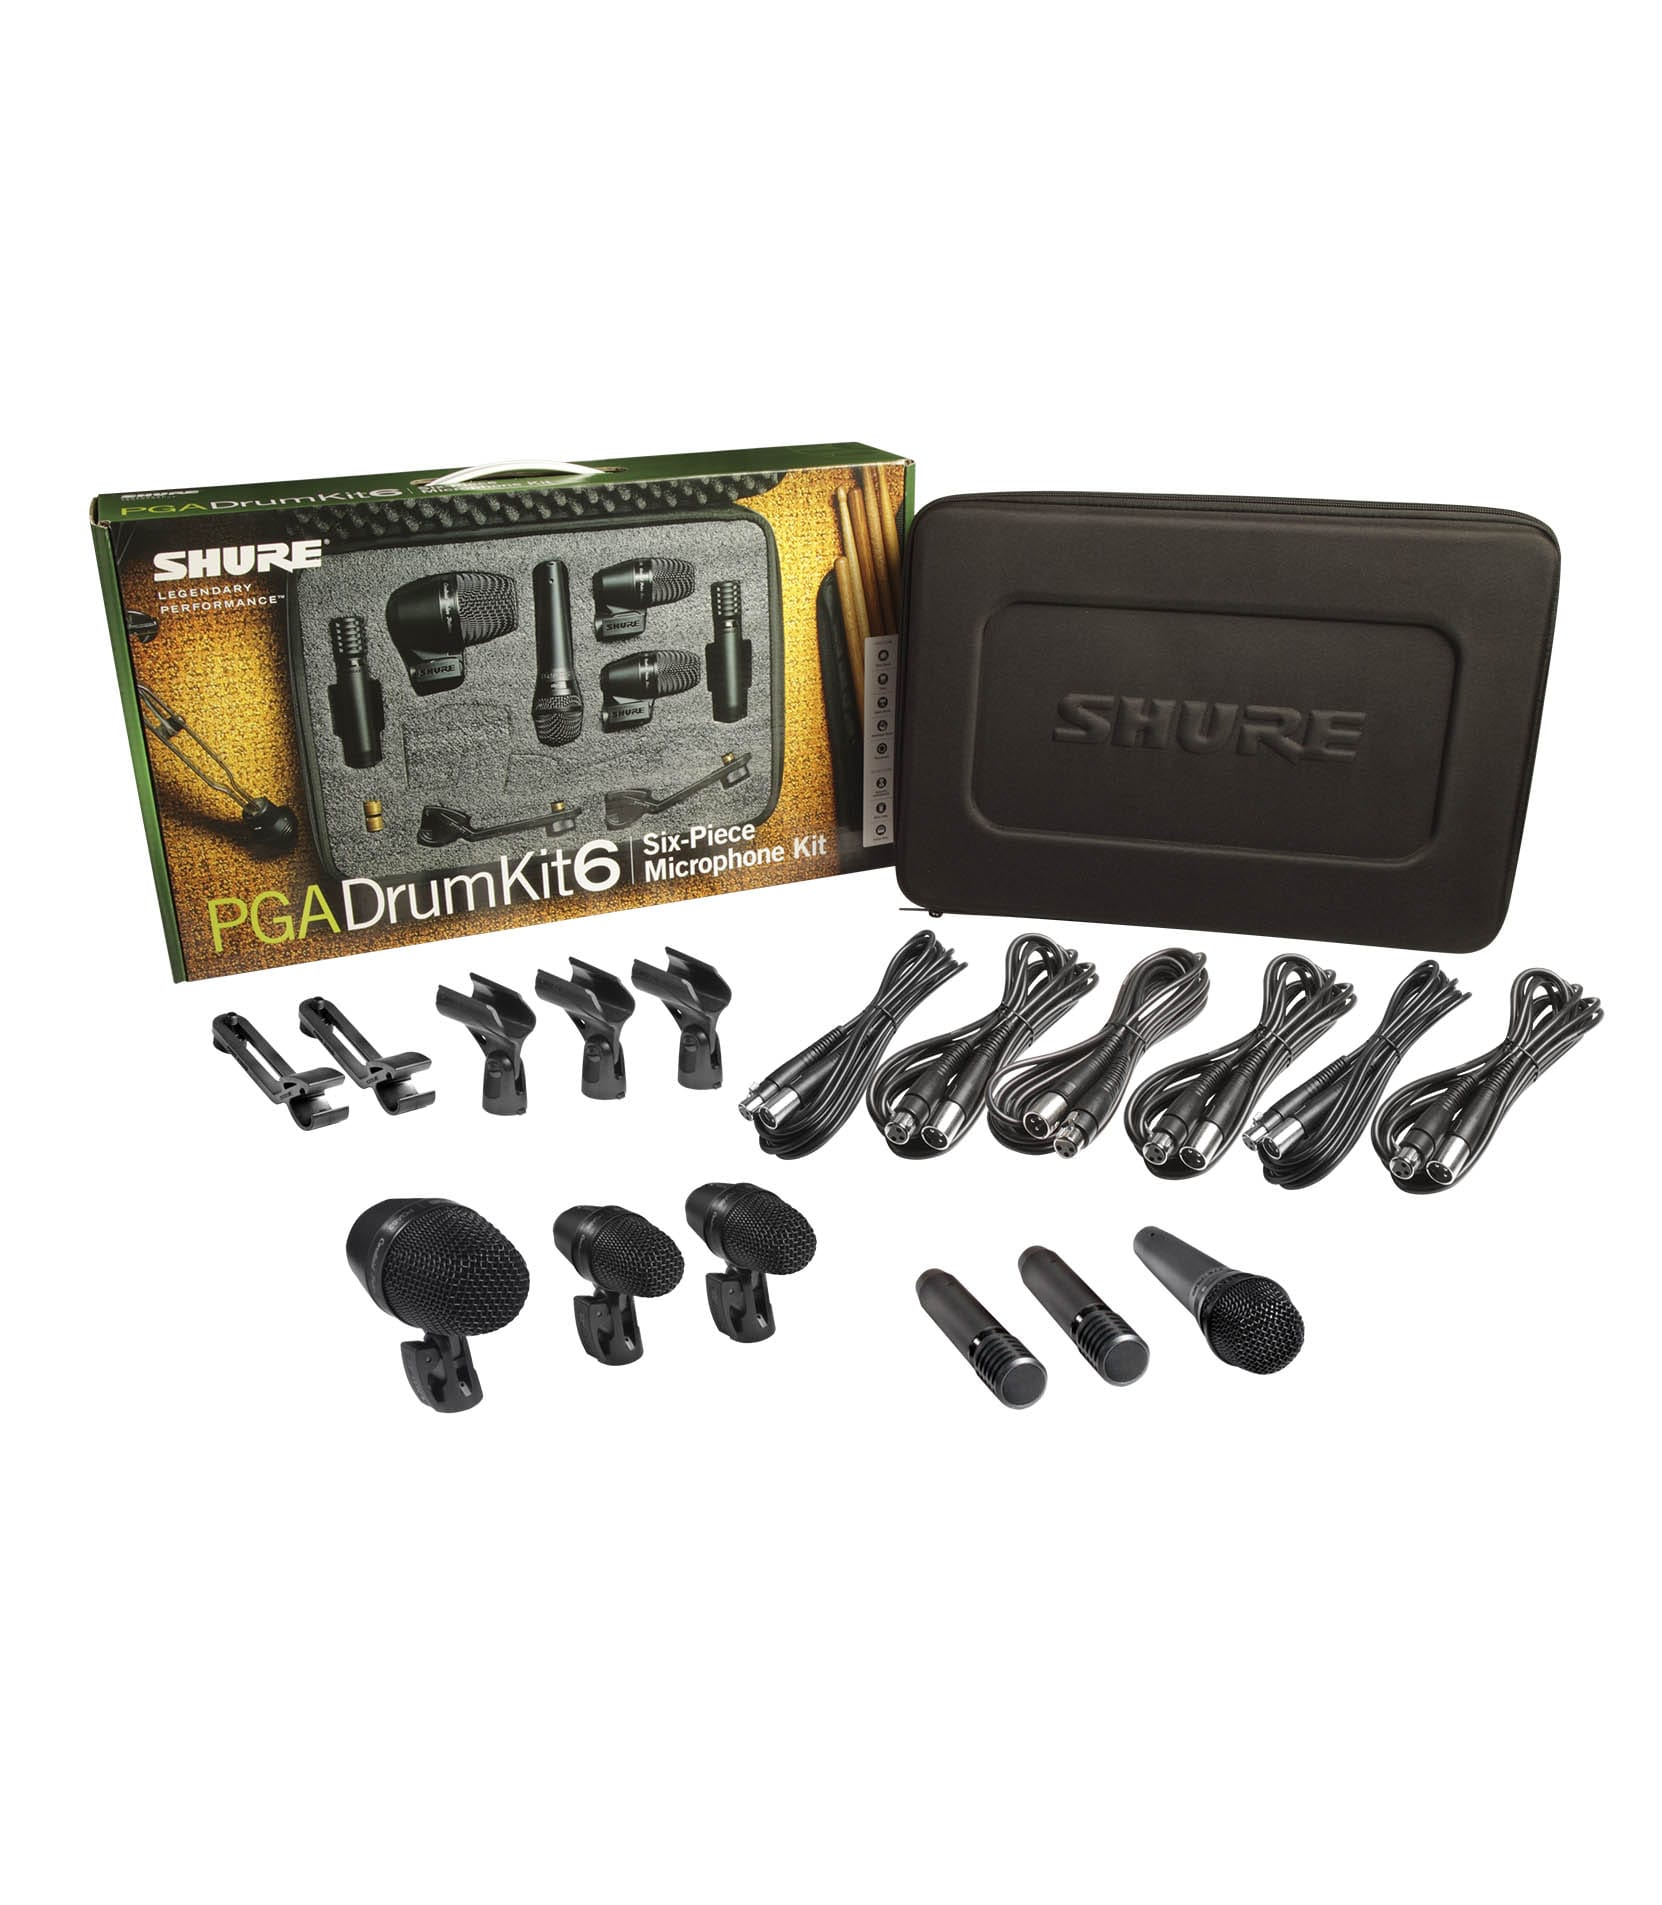 Shure - PGADRUMKIT6 6 Piece Drum Microphone Kit